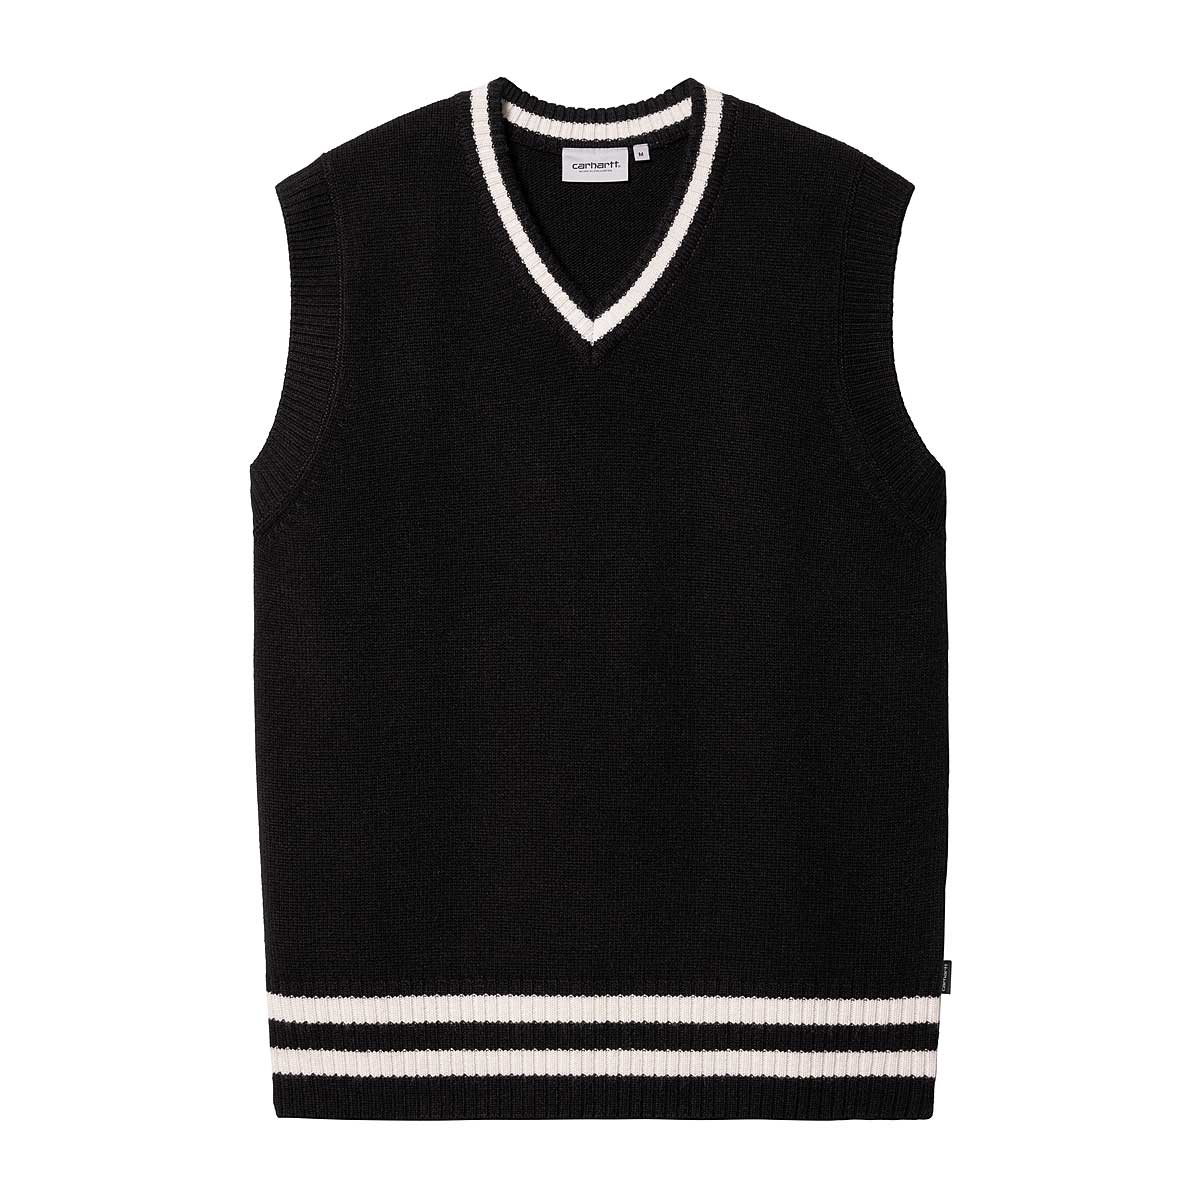 Image of Carhartt Wip Stanford Vest Sweater, Black / Salt